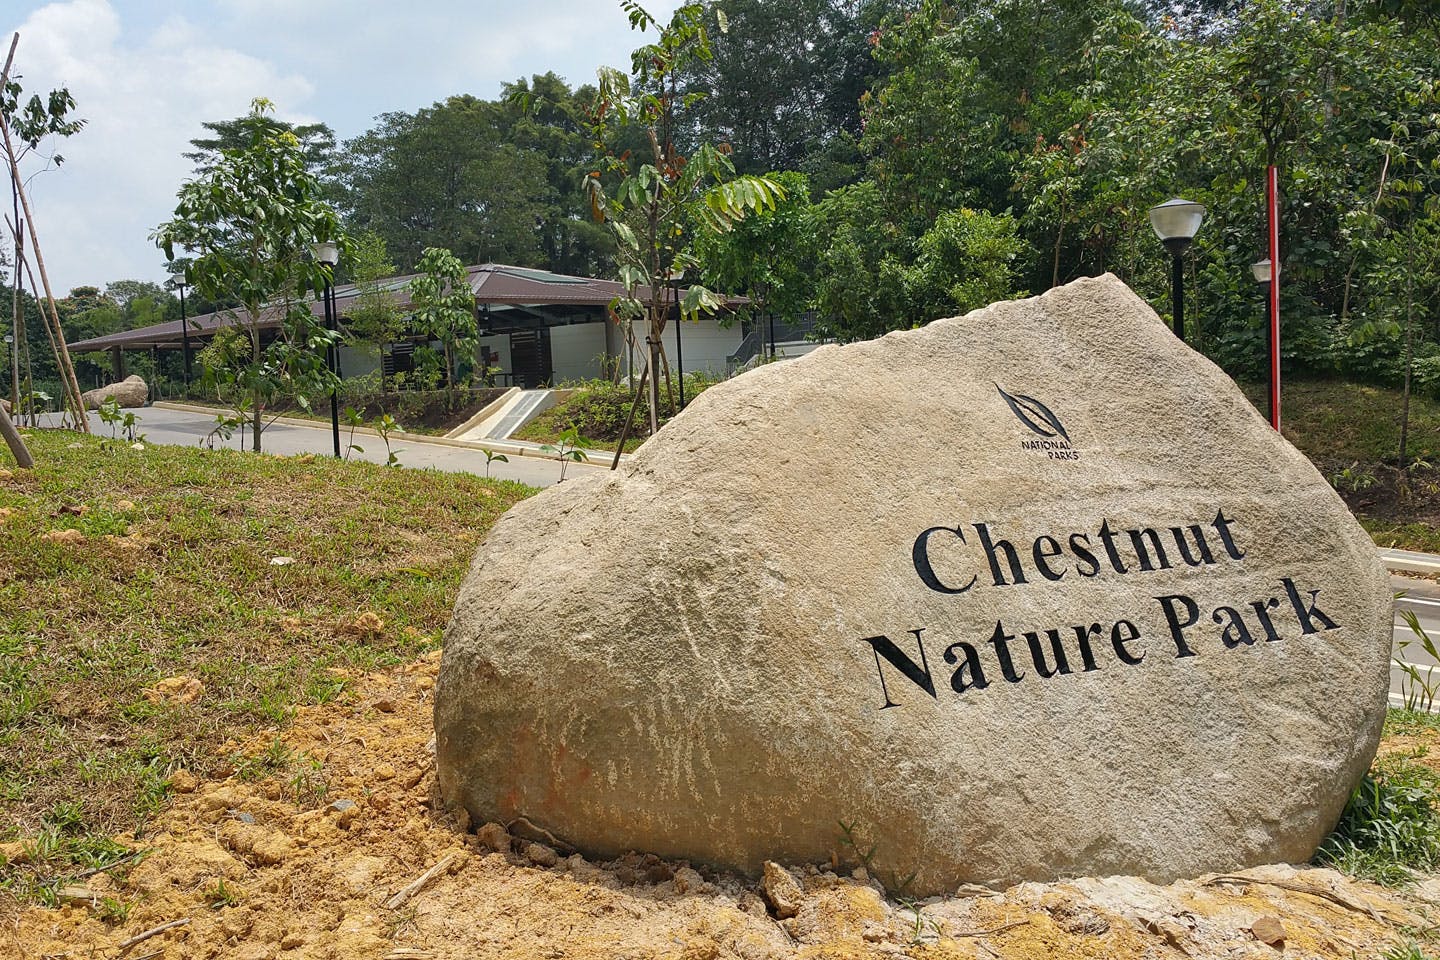 Check out Chestnut Nature Park's biking trails